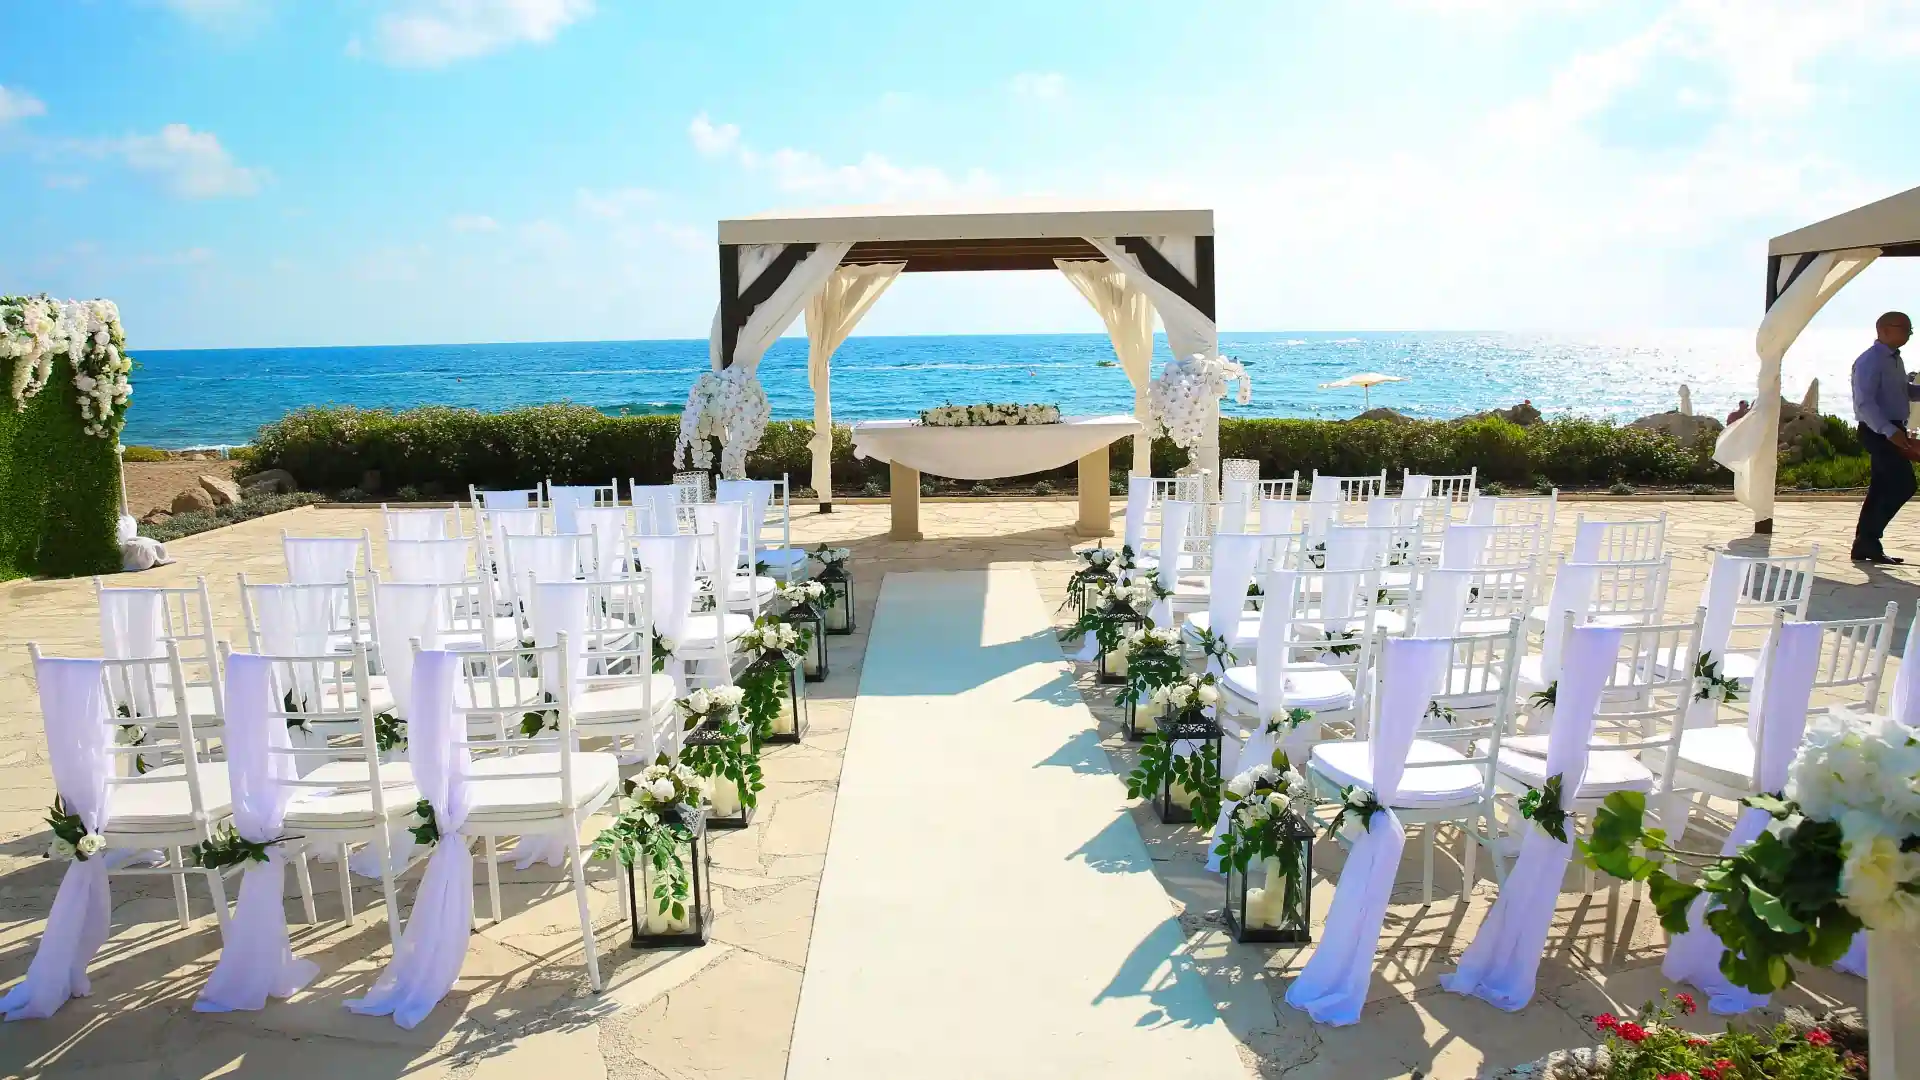 Leonardo Cypria Bay - The Ideal Venue for Your Wedding Ceremony